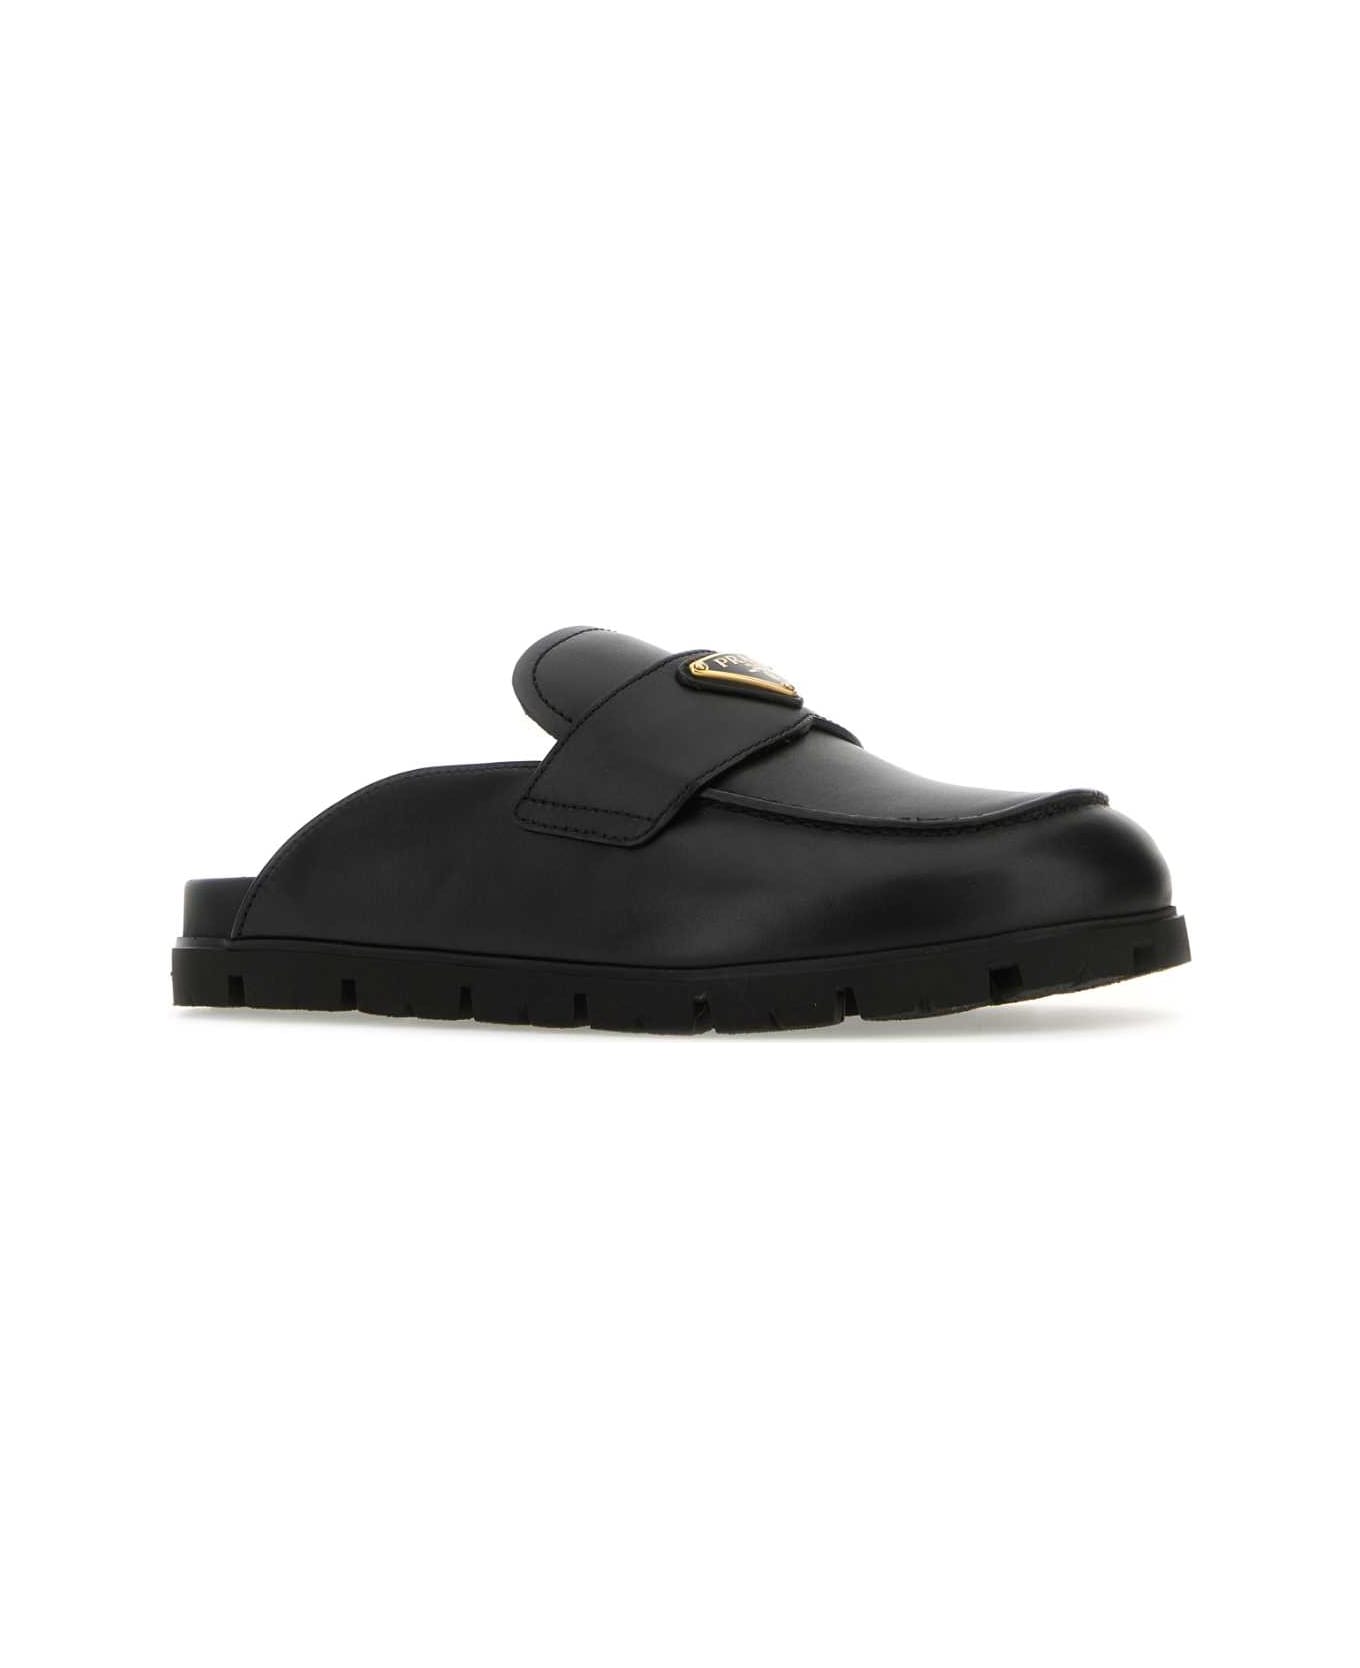 Prada Black Leather Slippers - NERO サンダル